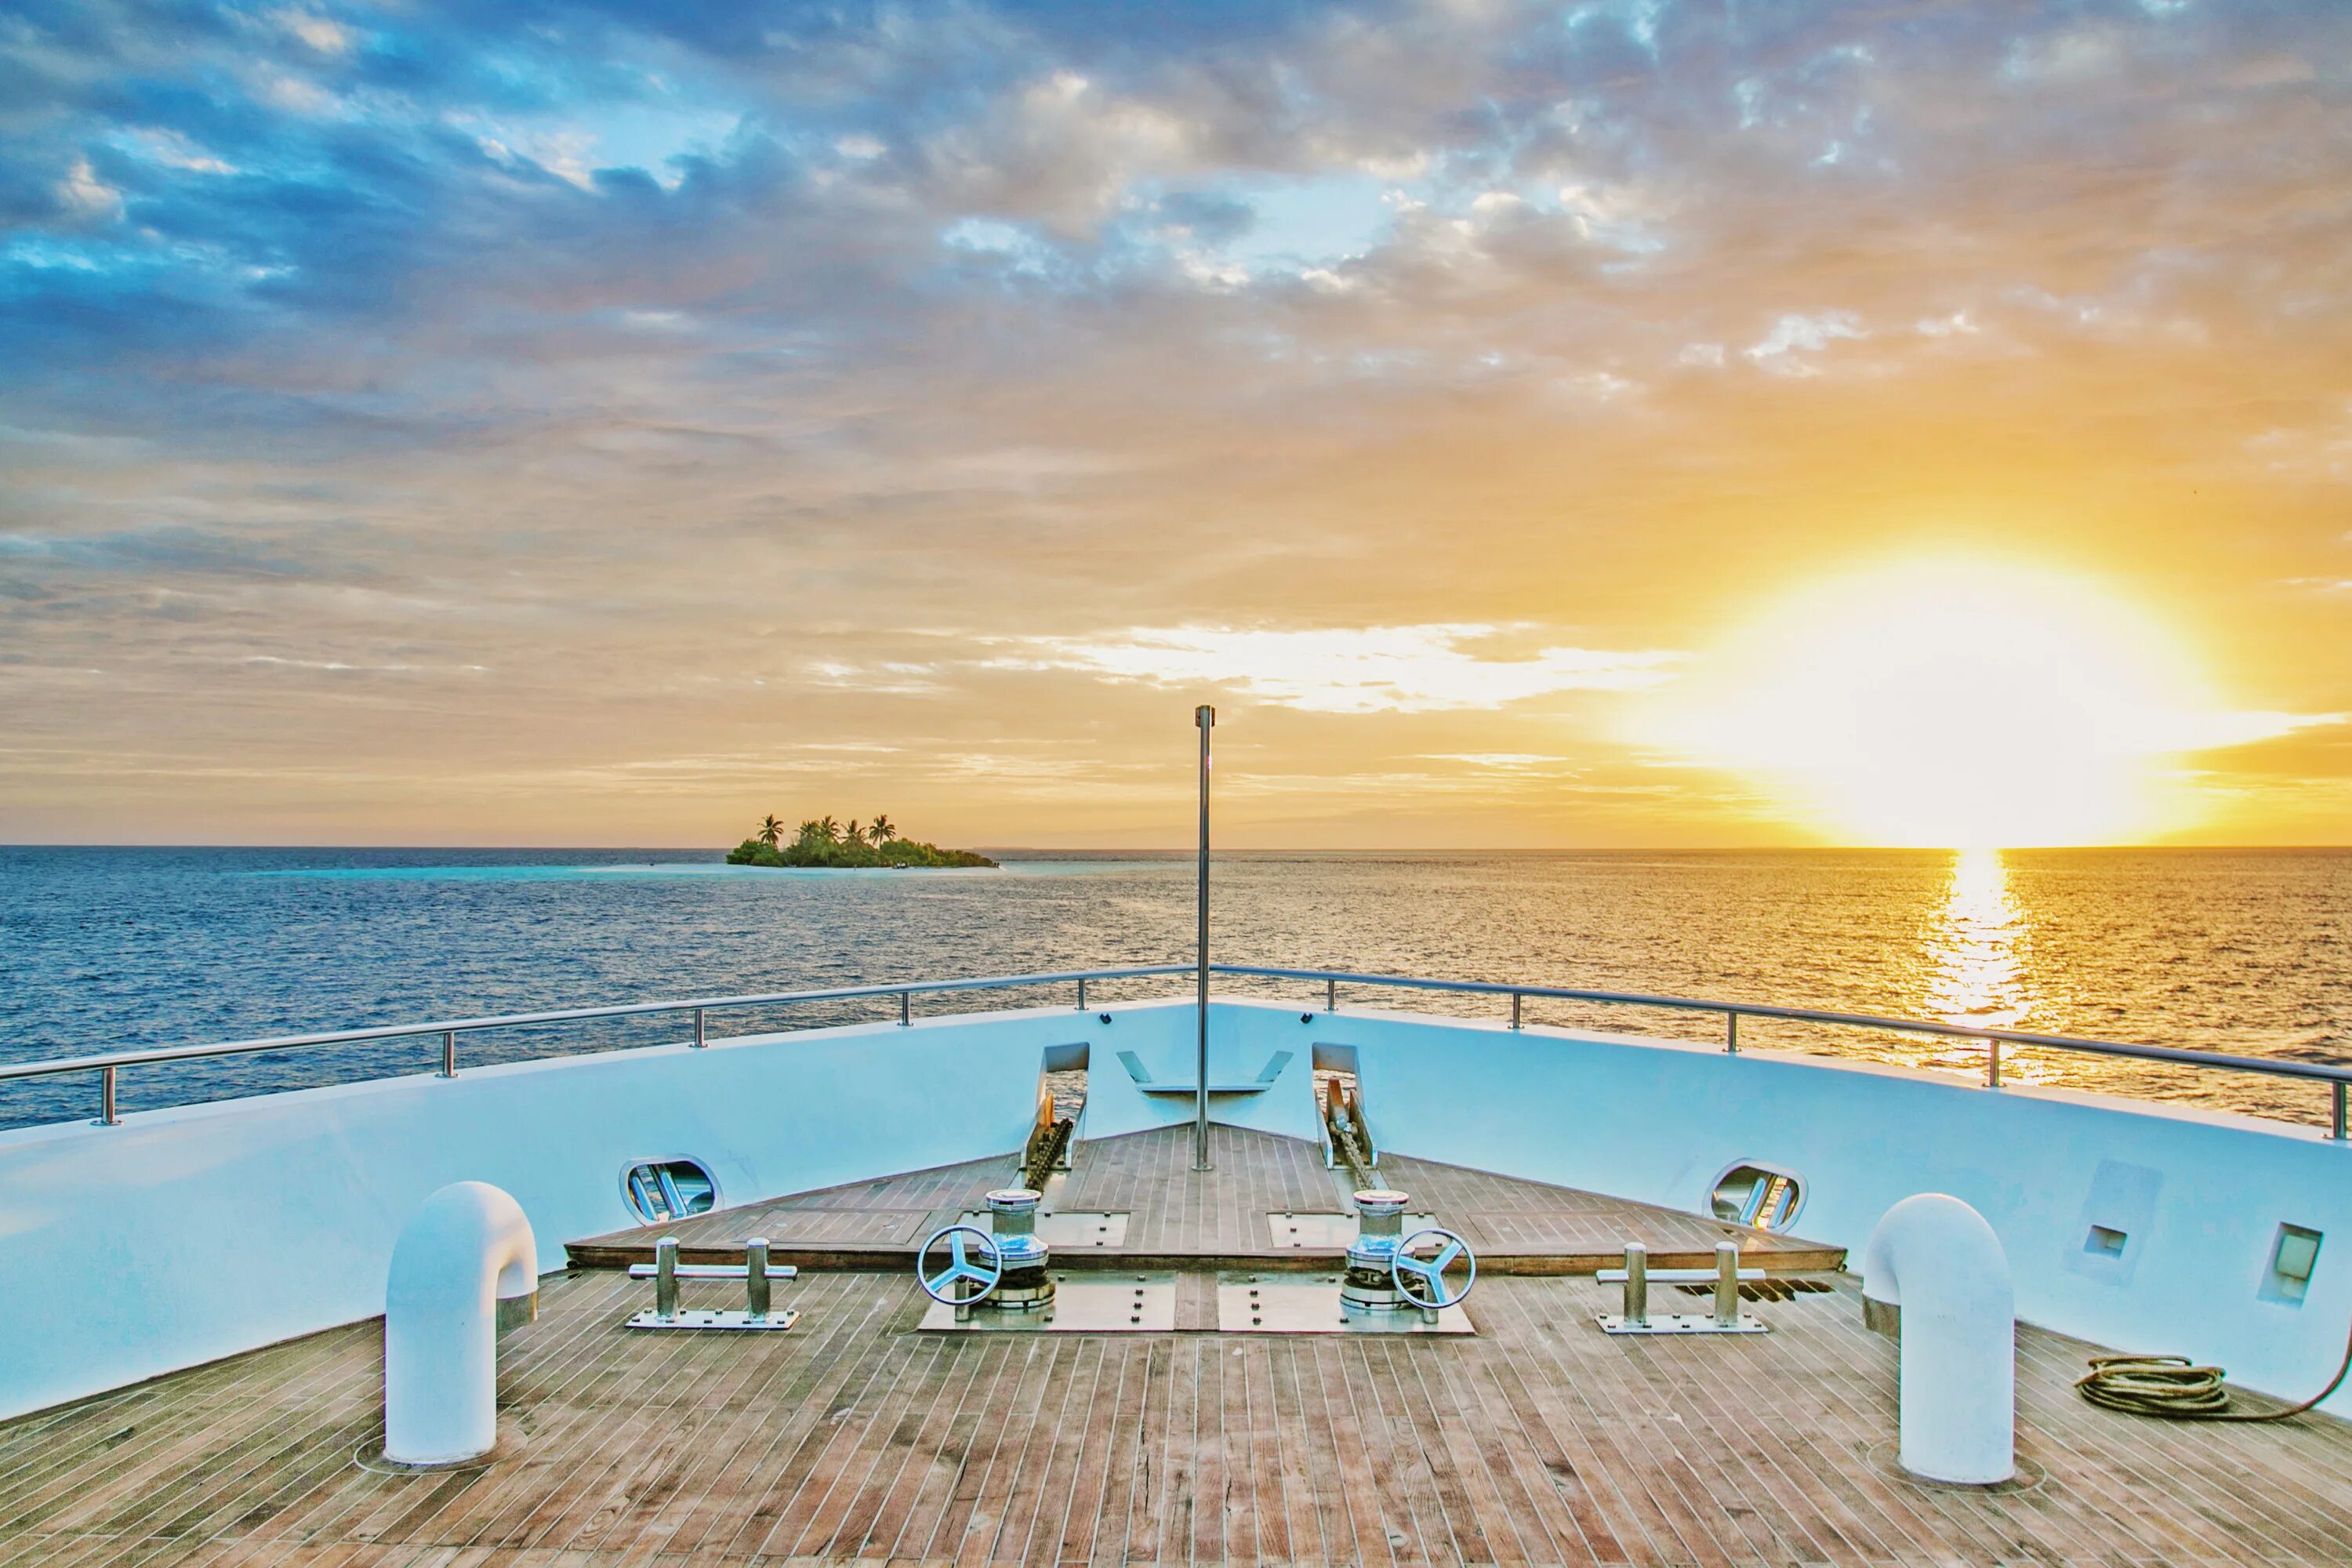 Perfect island. Scuba Spa яхта. Плавучий отель Мальдивы. Круиз на яхте Мальдивы. Мальдивы Scuba Spa яхта.